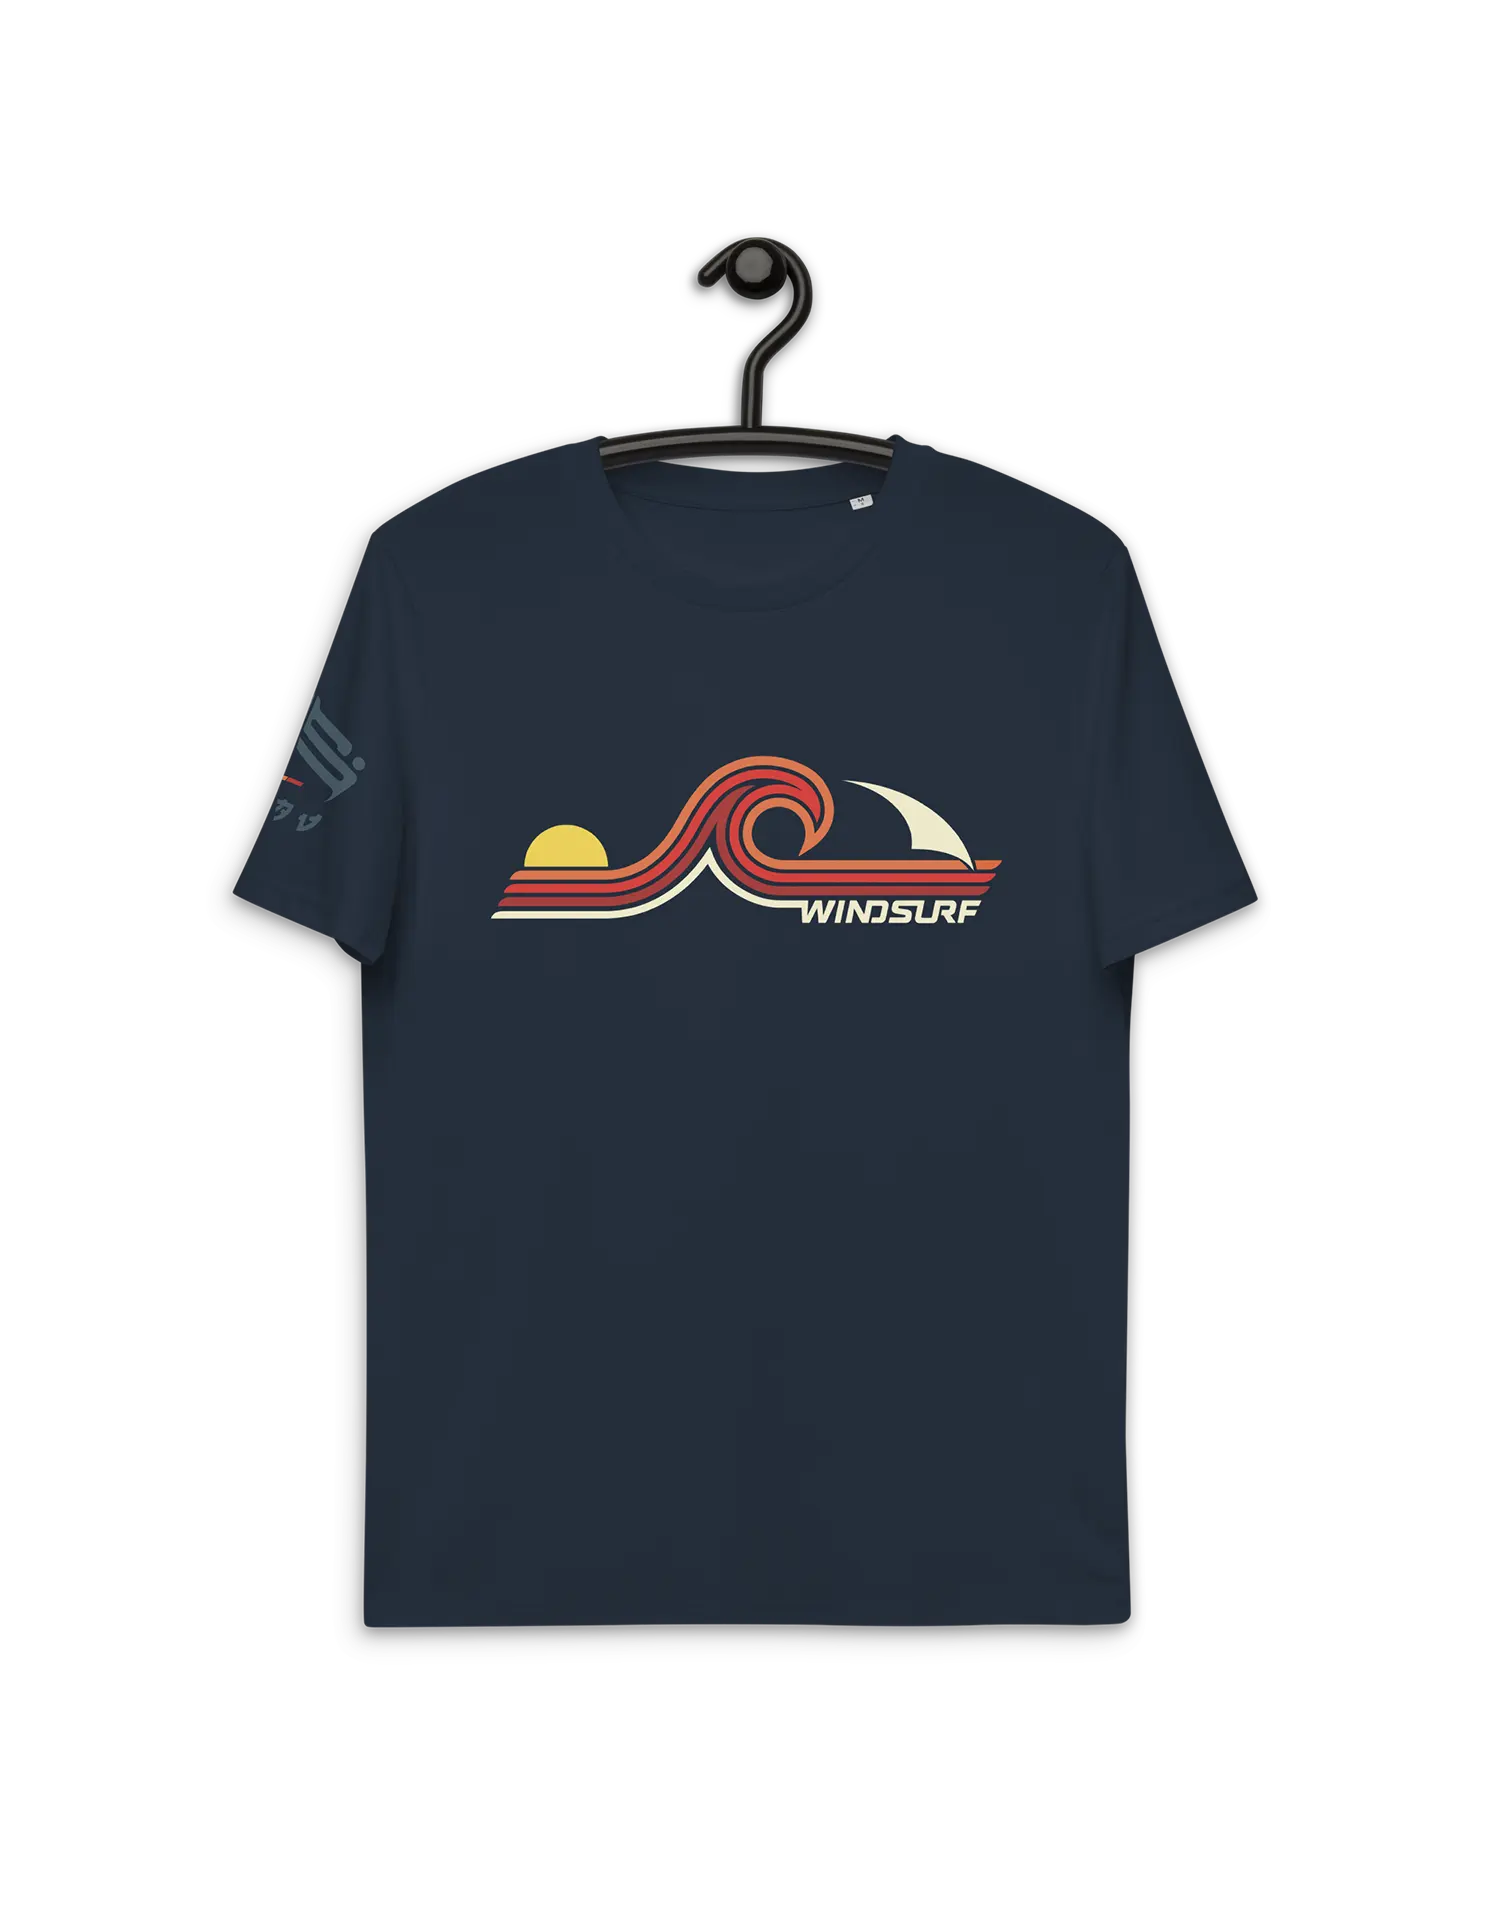 Windsurf Wave French Navy Premium Organic Cotton Eco-friendly T-Shirt by KOAV